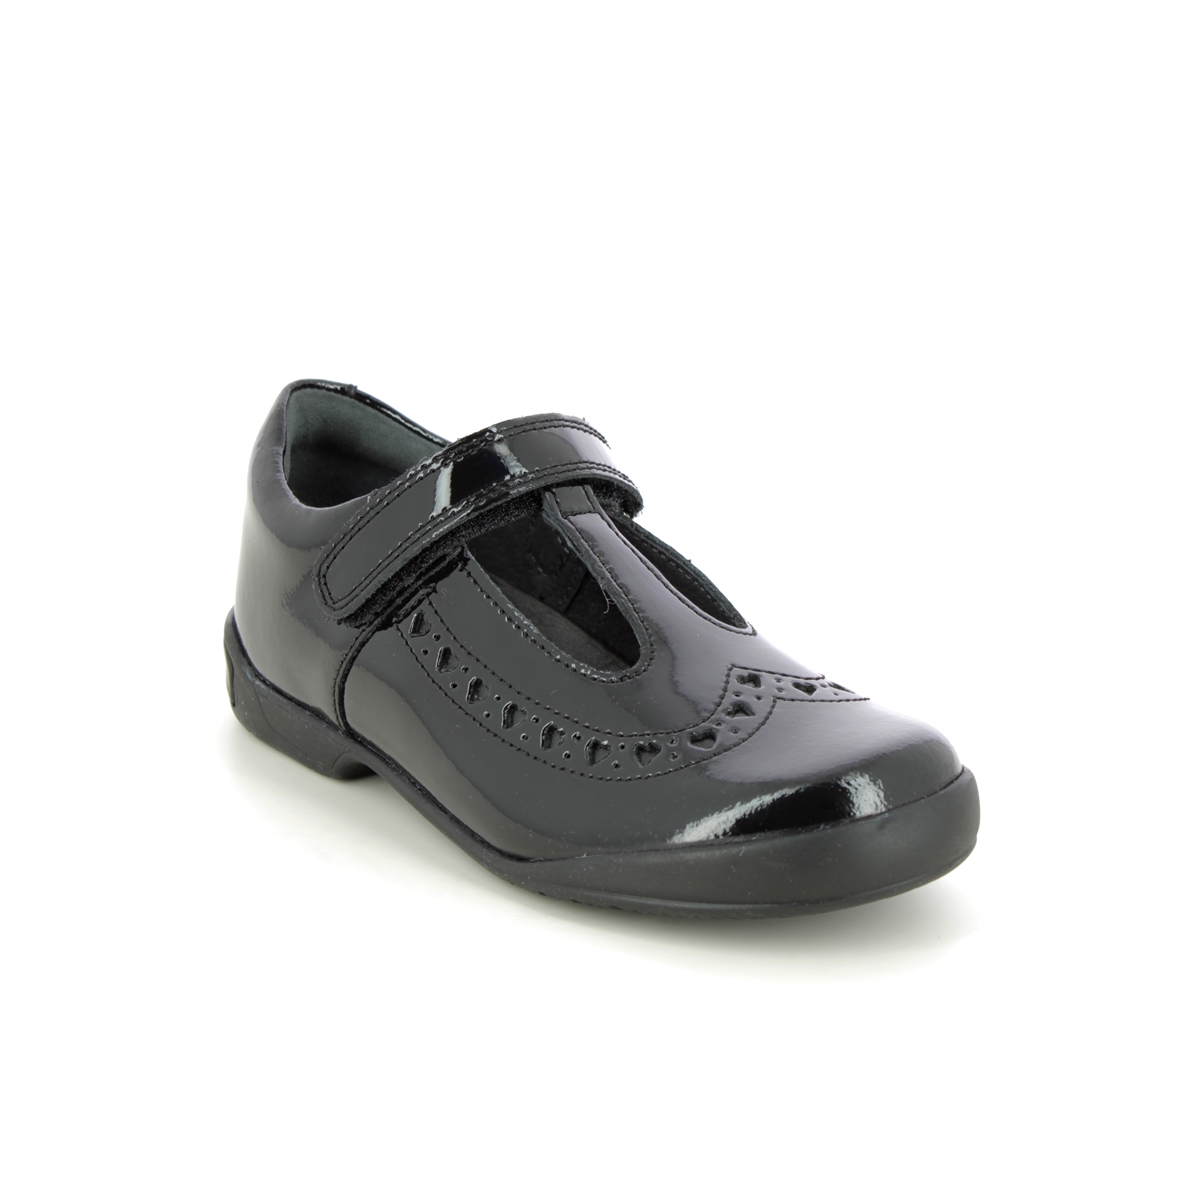 Start Rite - Leapfrog In Black Patent 2789-36F In Size 11 In Plain Black Patent For School Girls Shoes  In Black Patent For kids